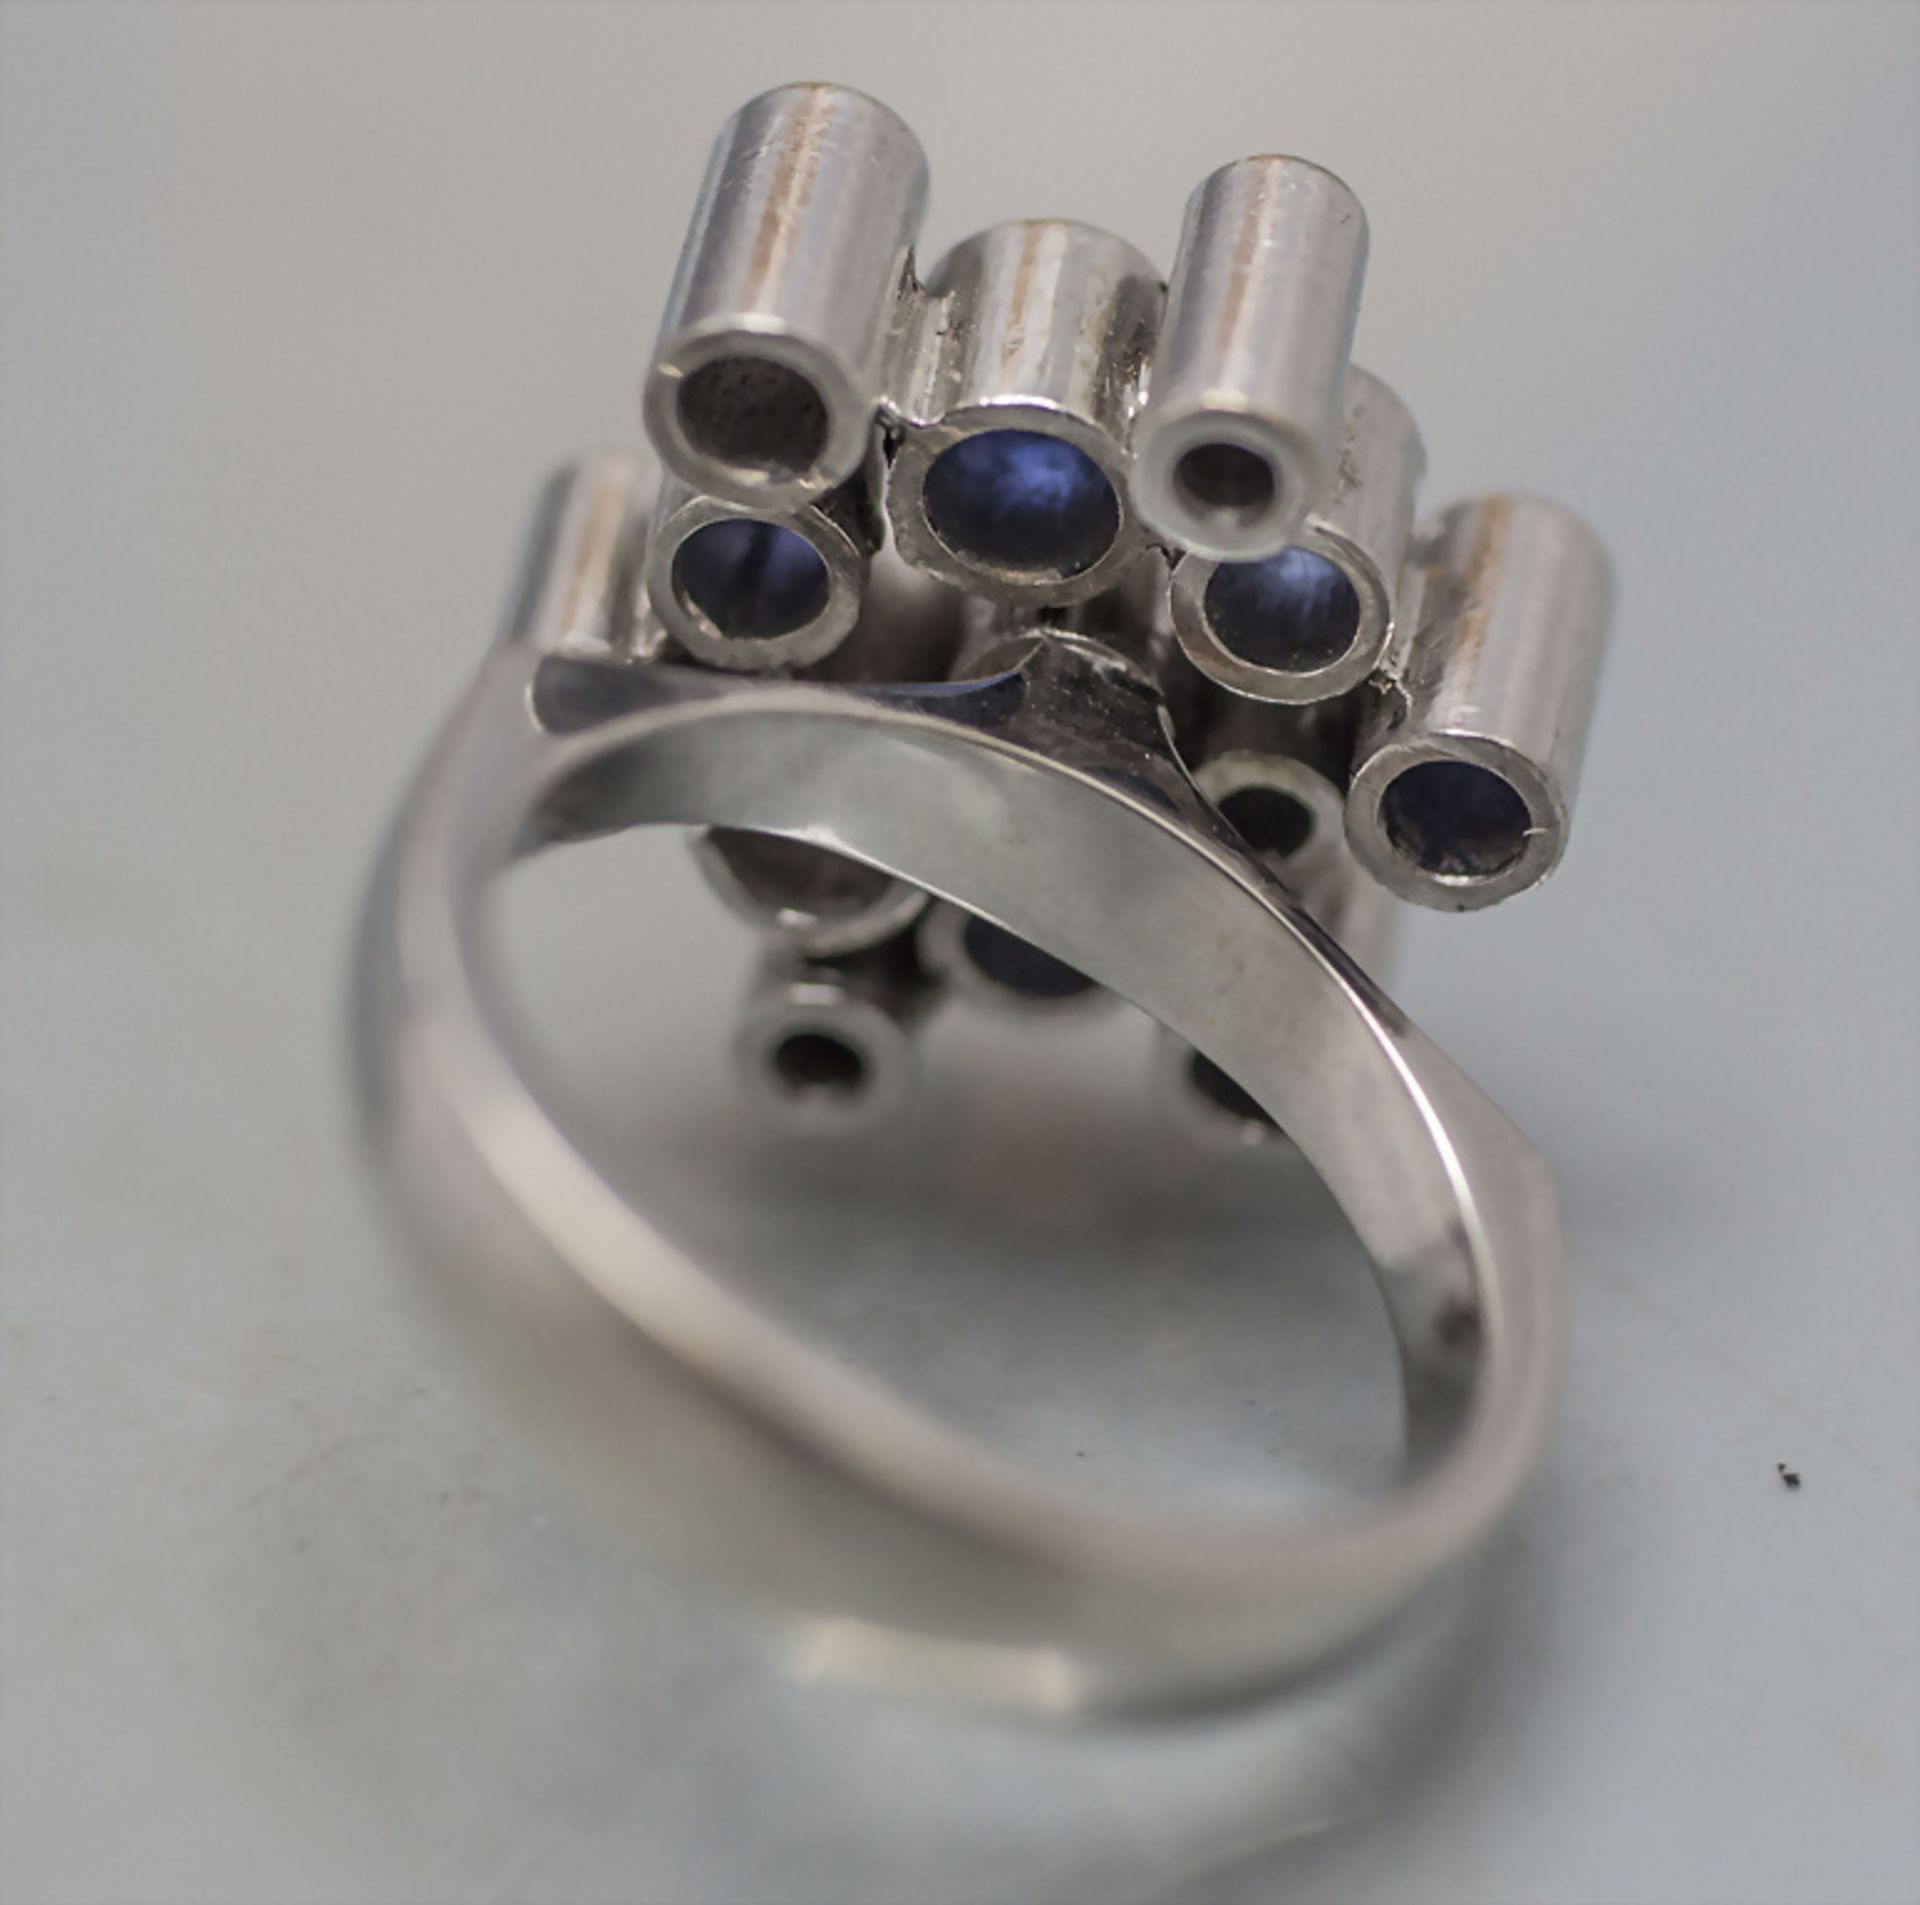 Damenring mit Saphiren und Brillanten / A ladies 18 ct white gold ring with sapphires and diamonds - Image 4 of 4